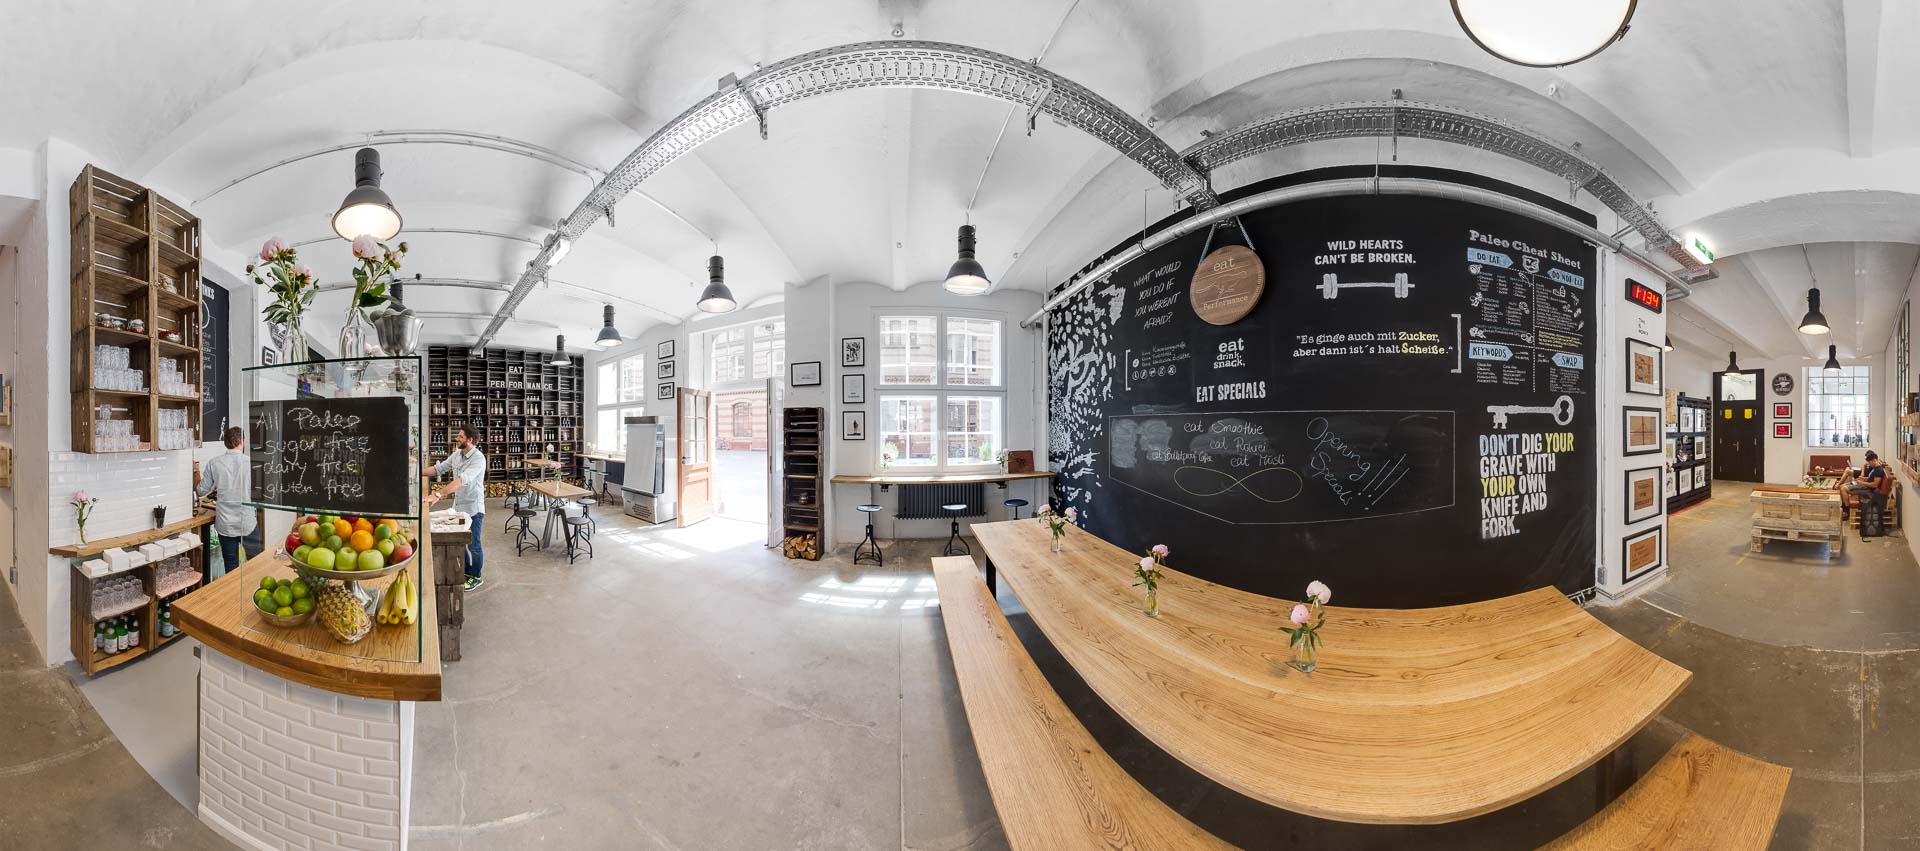 Paleo Cafe Berlin Kreuzberg Healthy Food – 360° Foto